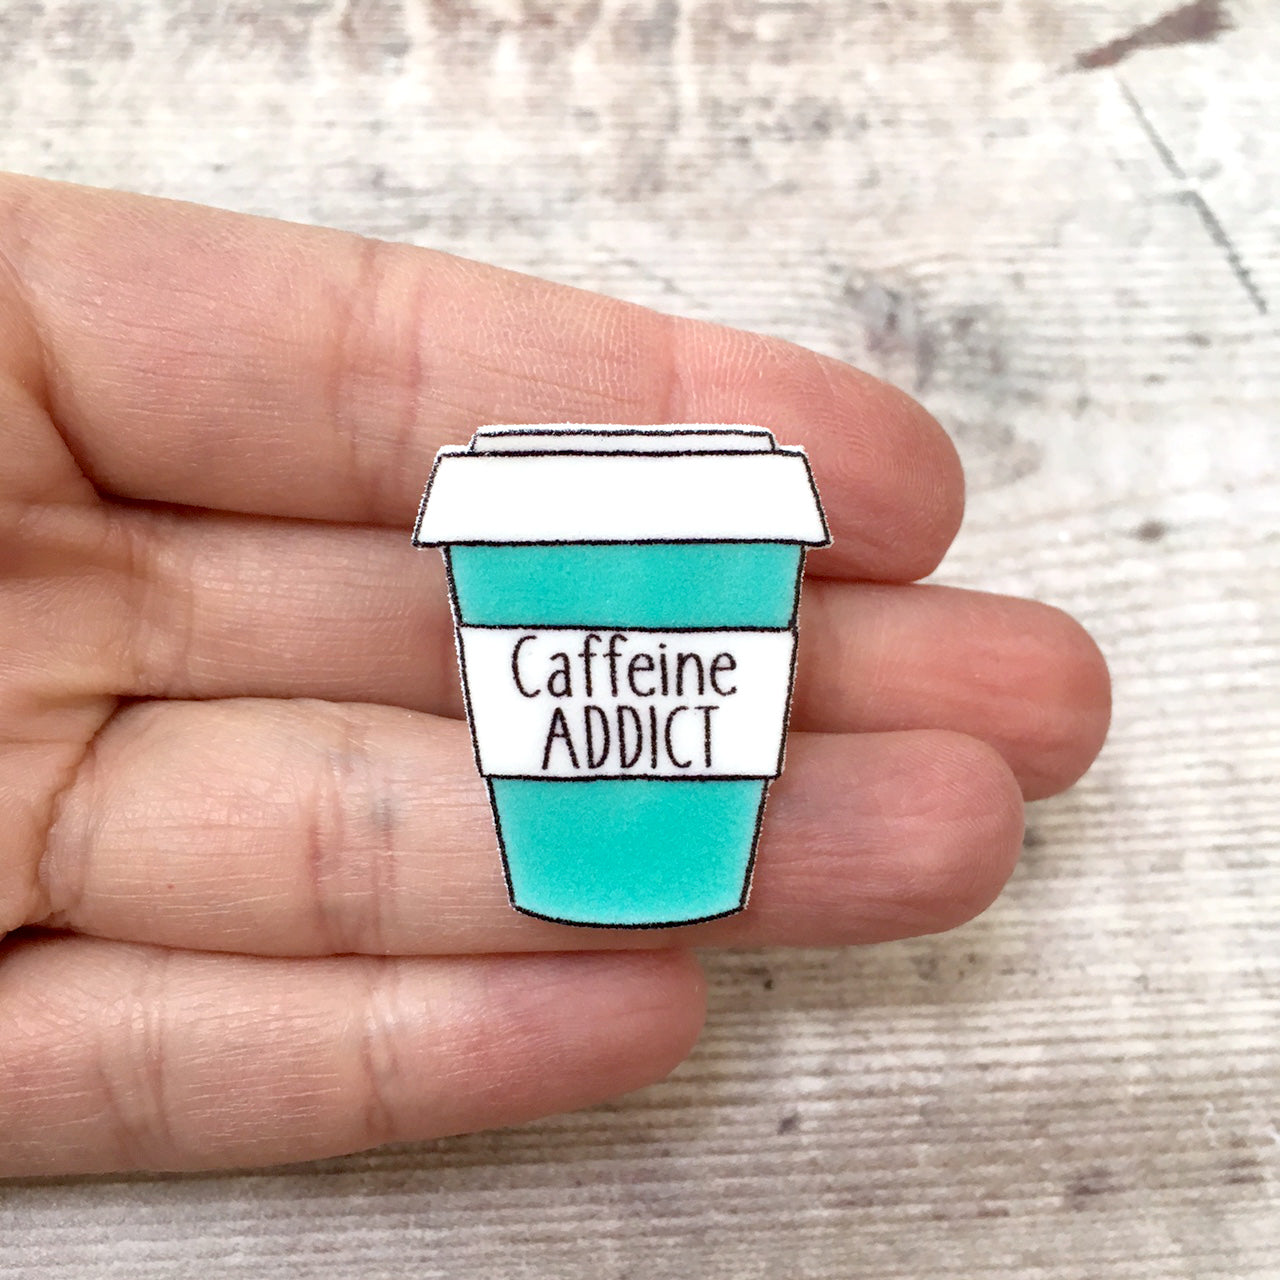 Caffeine addict coffee cup pin brooch